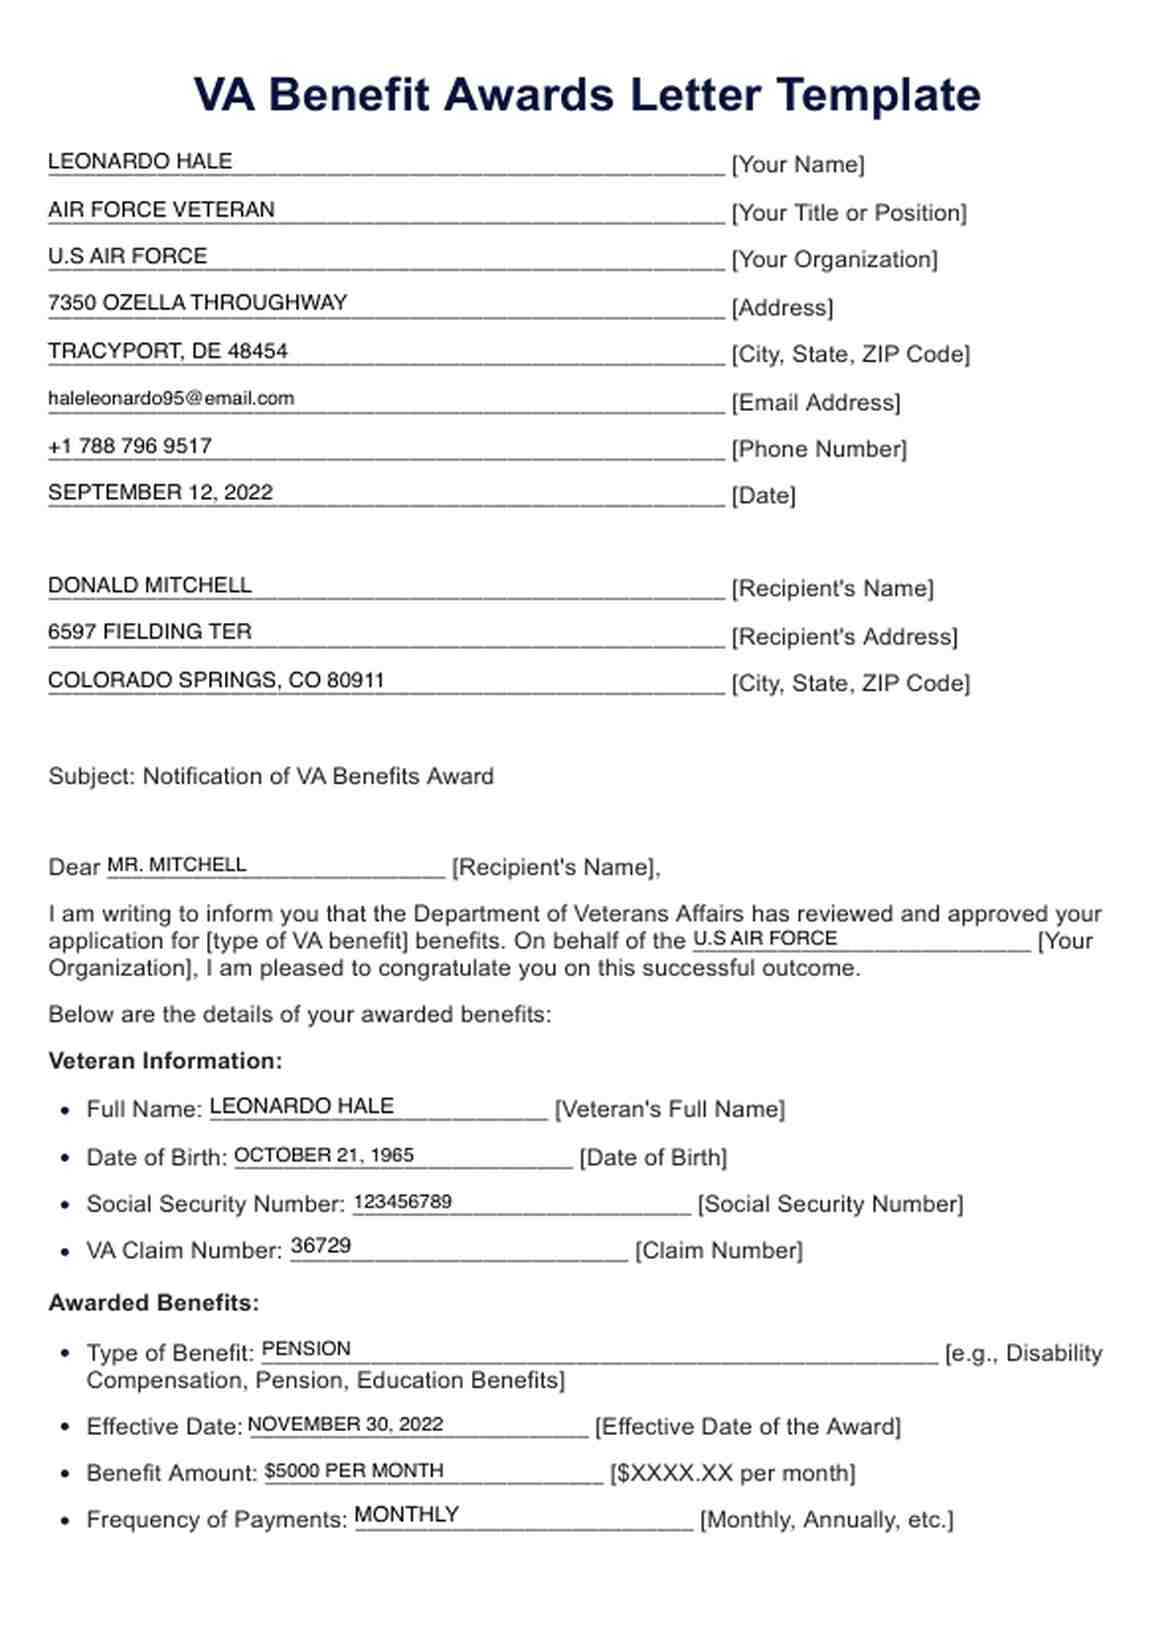 VA Benefits Award Letter PDF Example